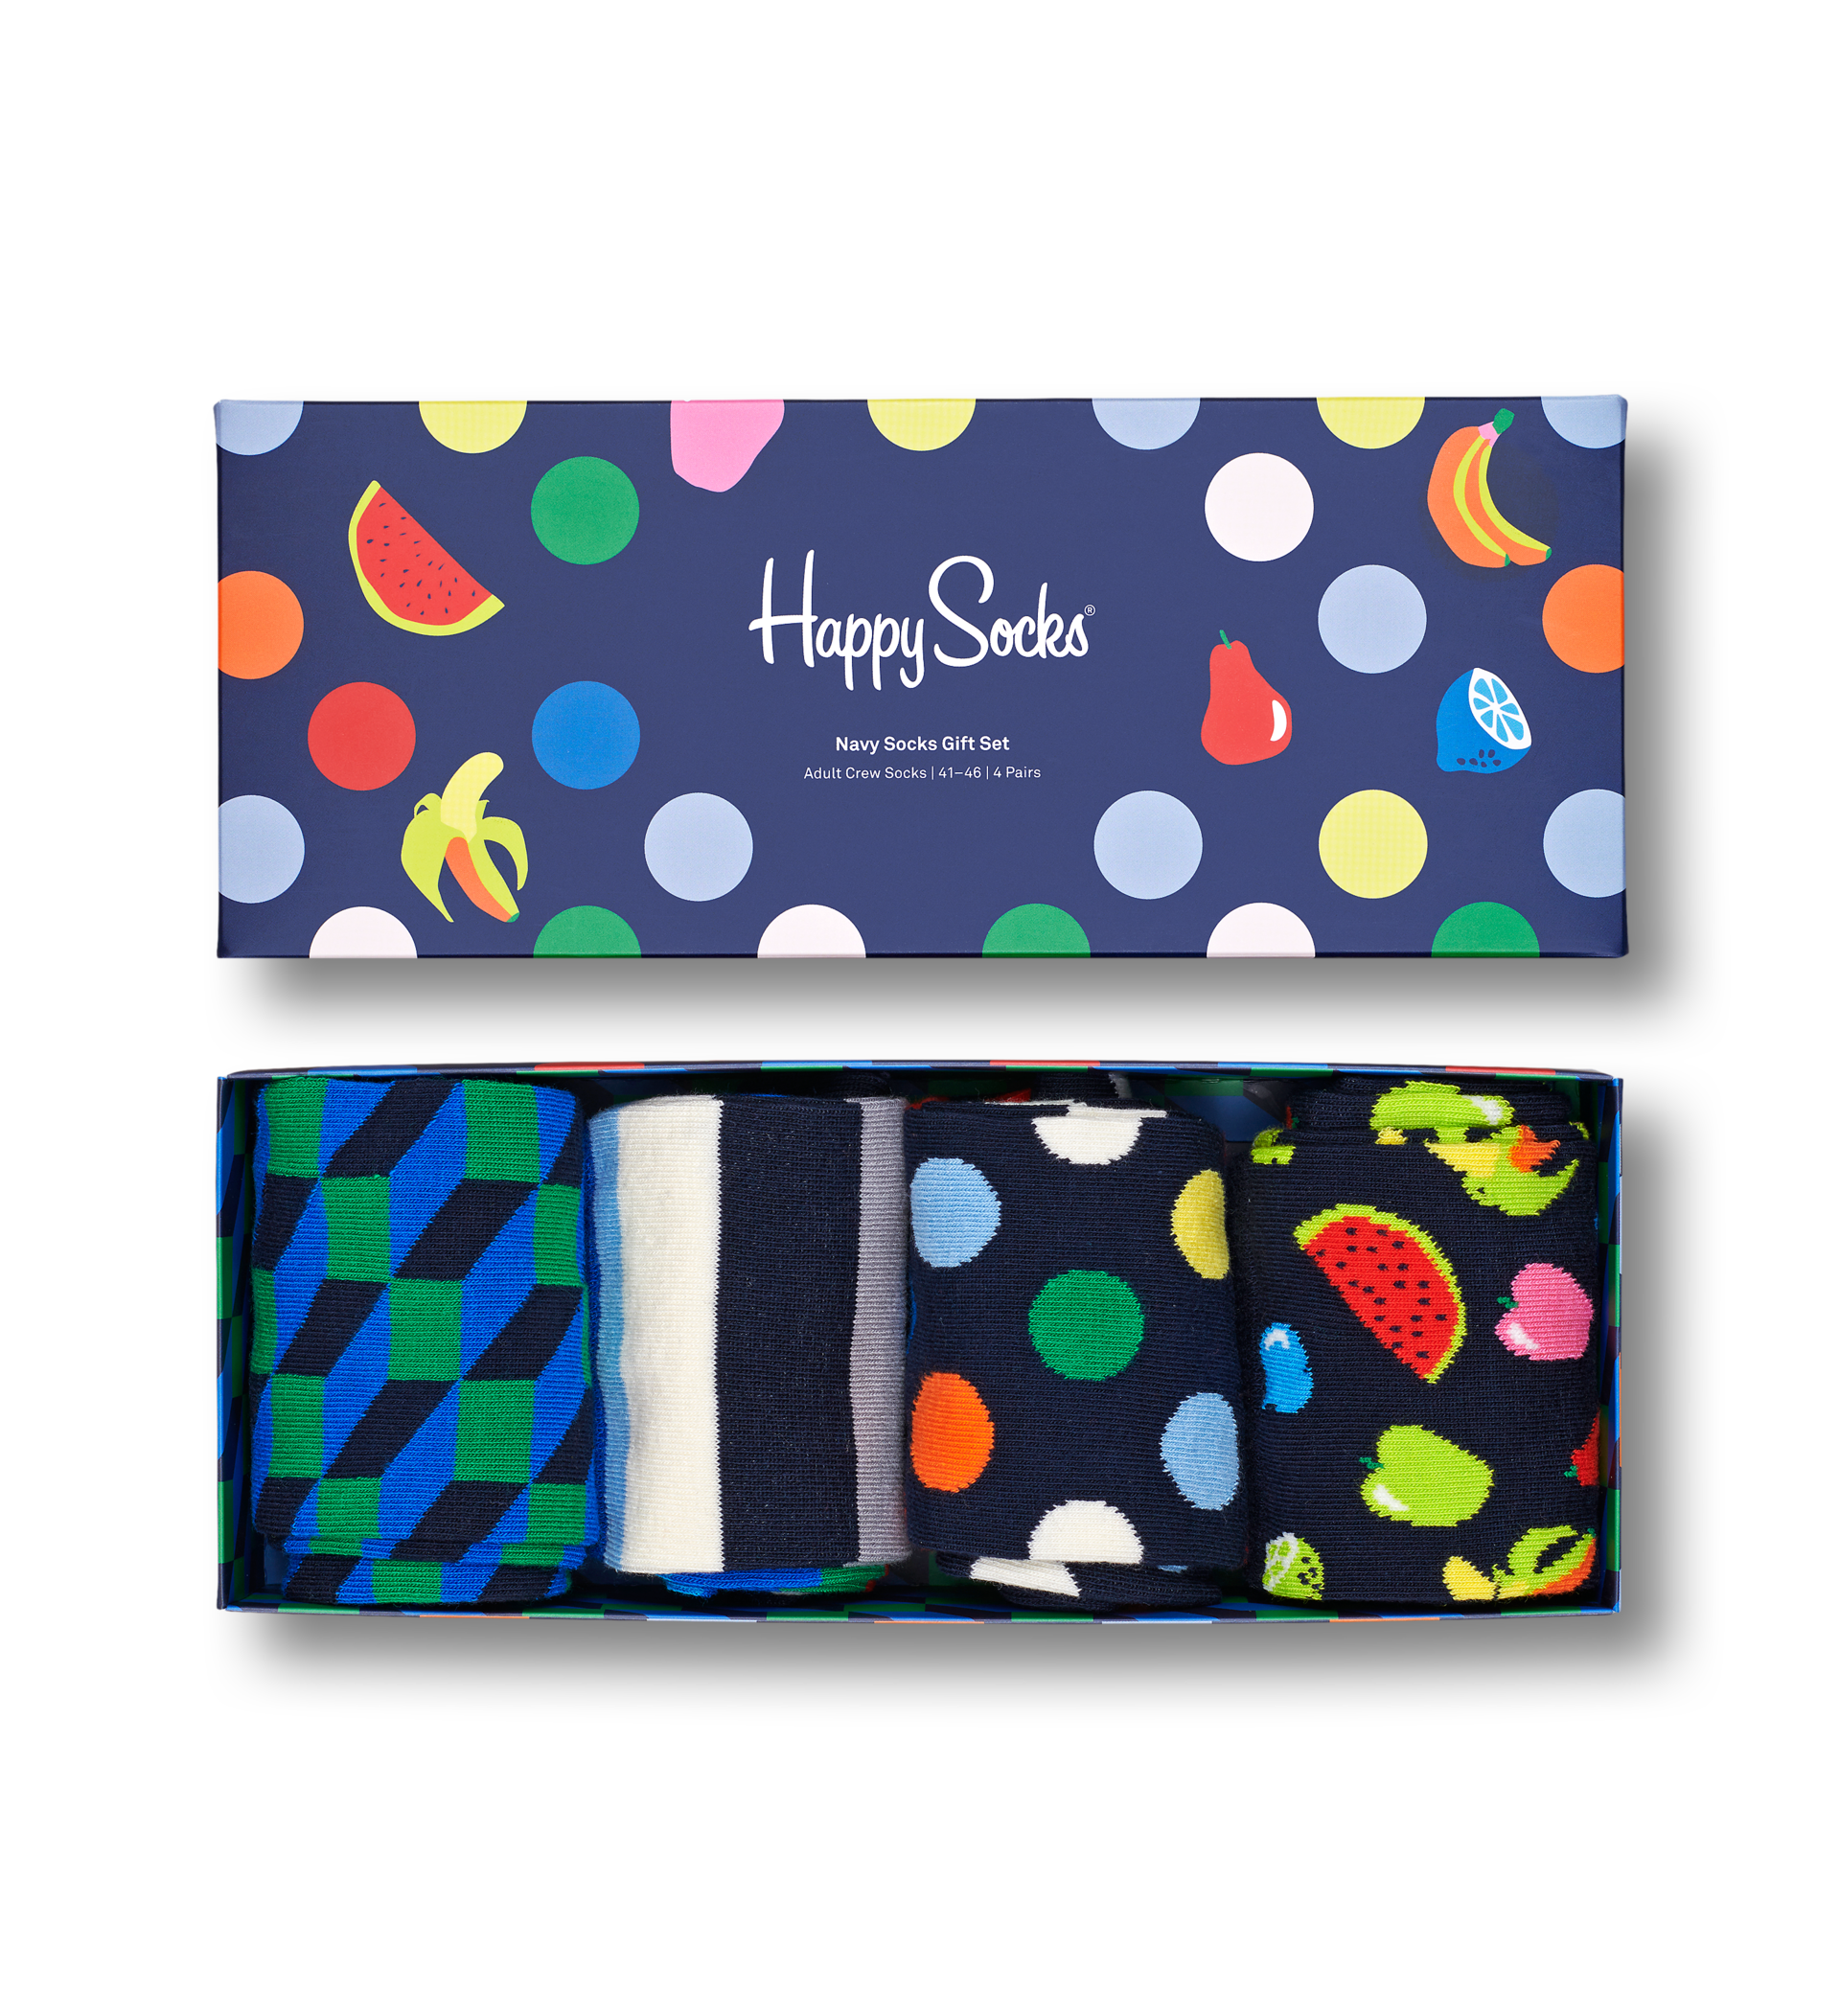 Happy Socks Navy Socks Gift Box 4-Pack - Blue,Green,Yellow - Unisex